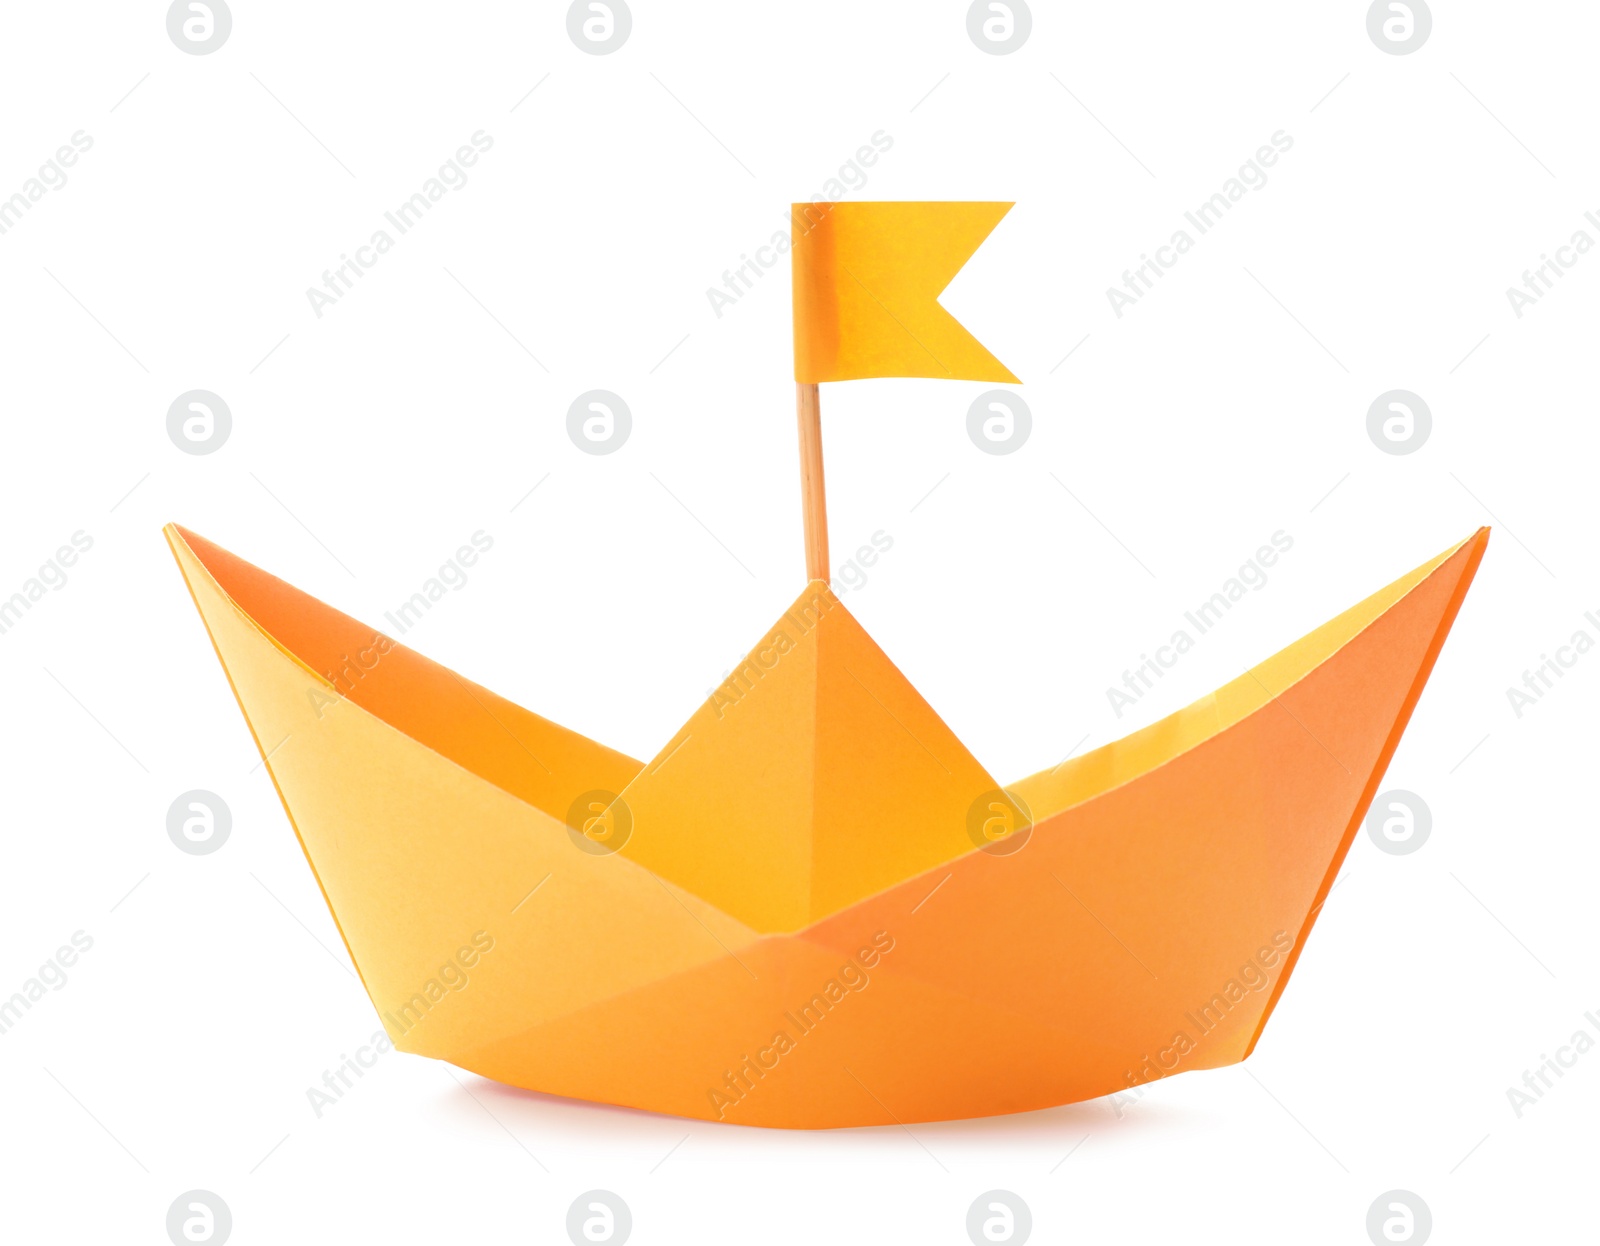 Photo of Handmade orange paper boat with flag isolated on white. Origami art